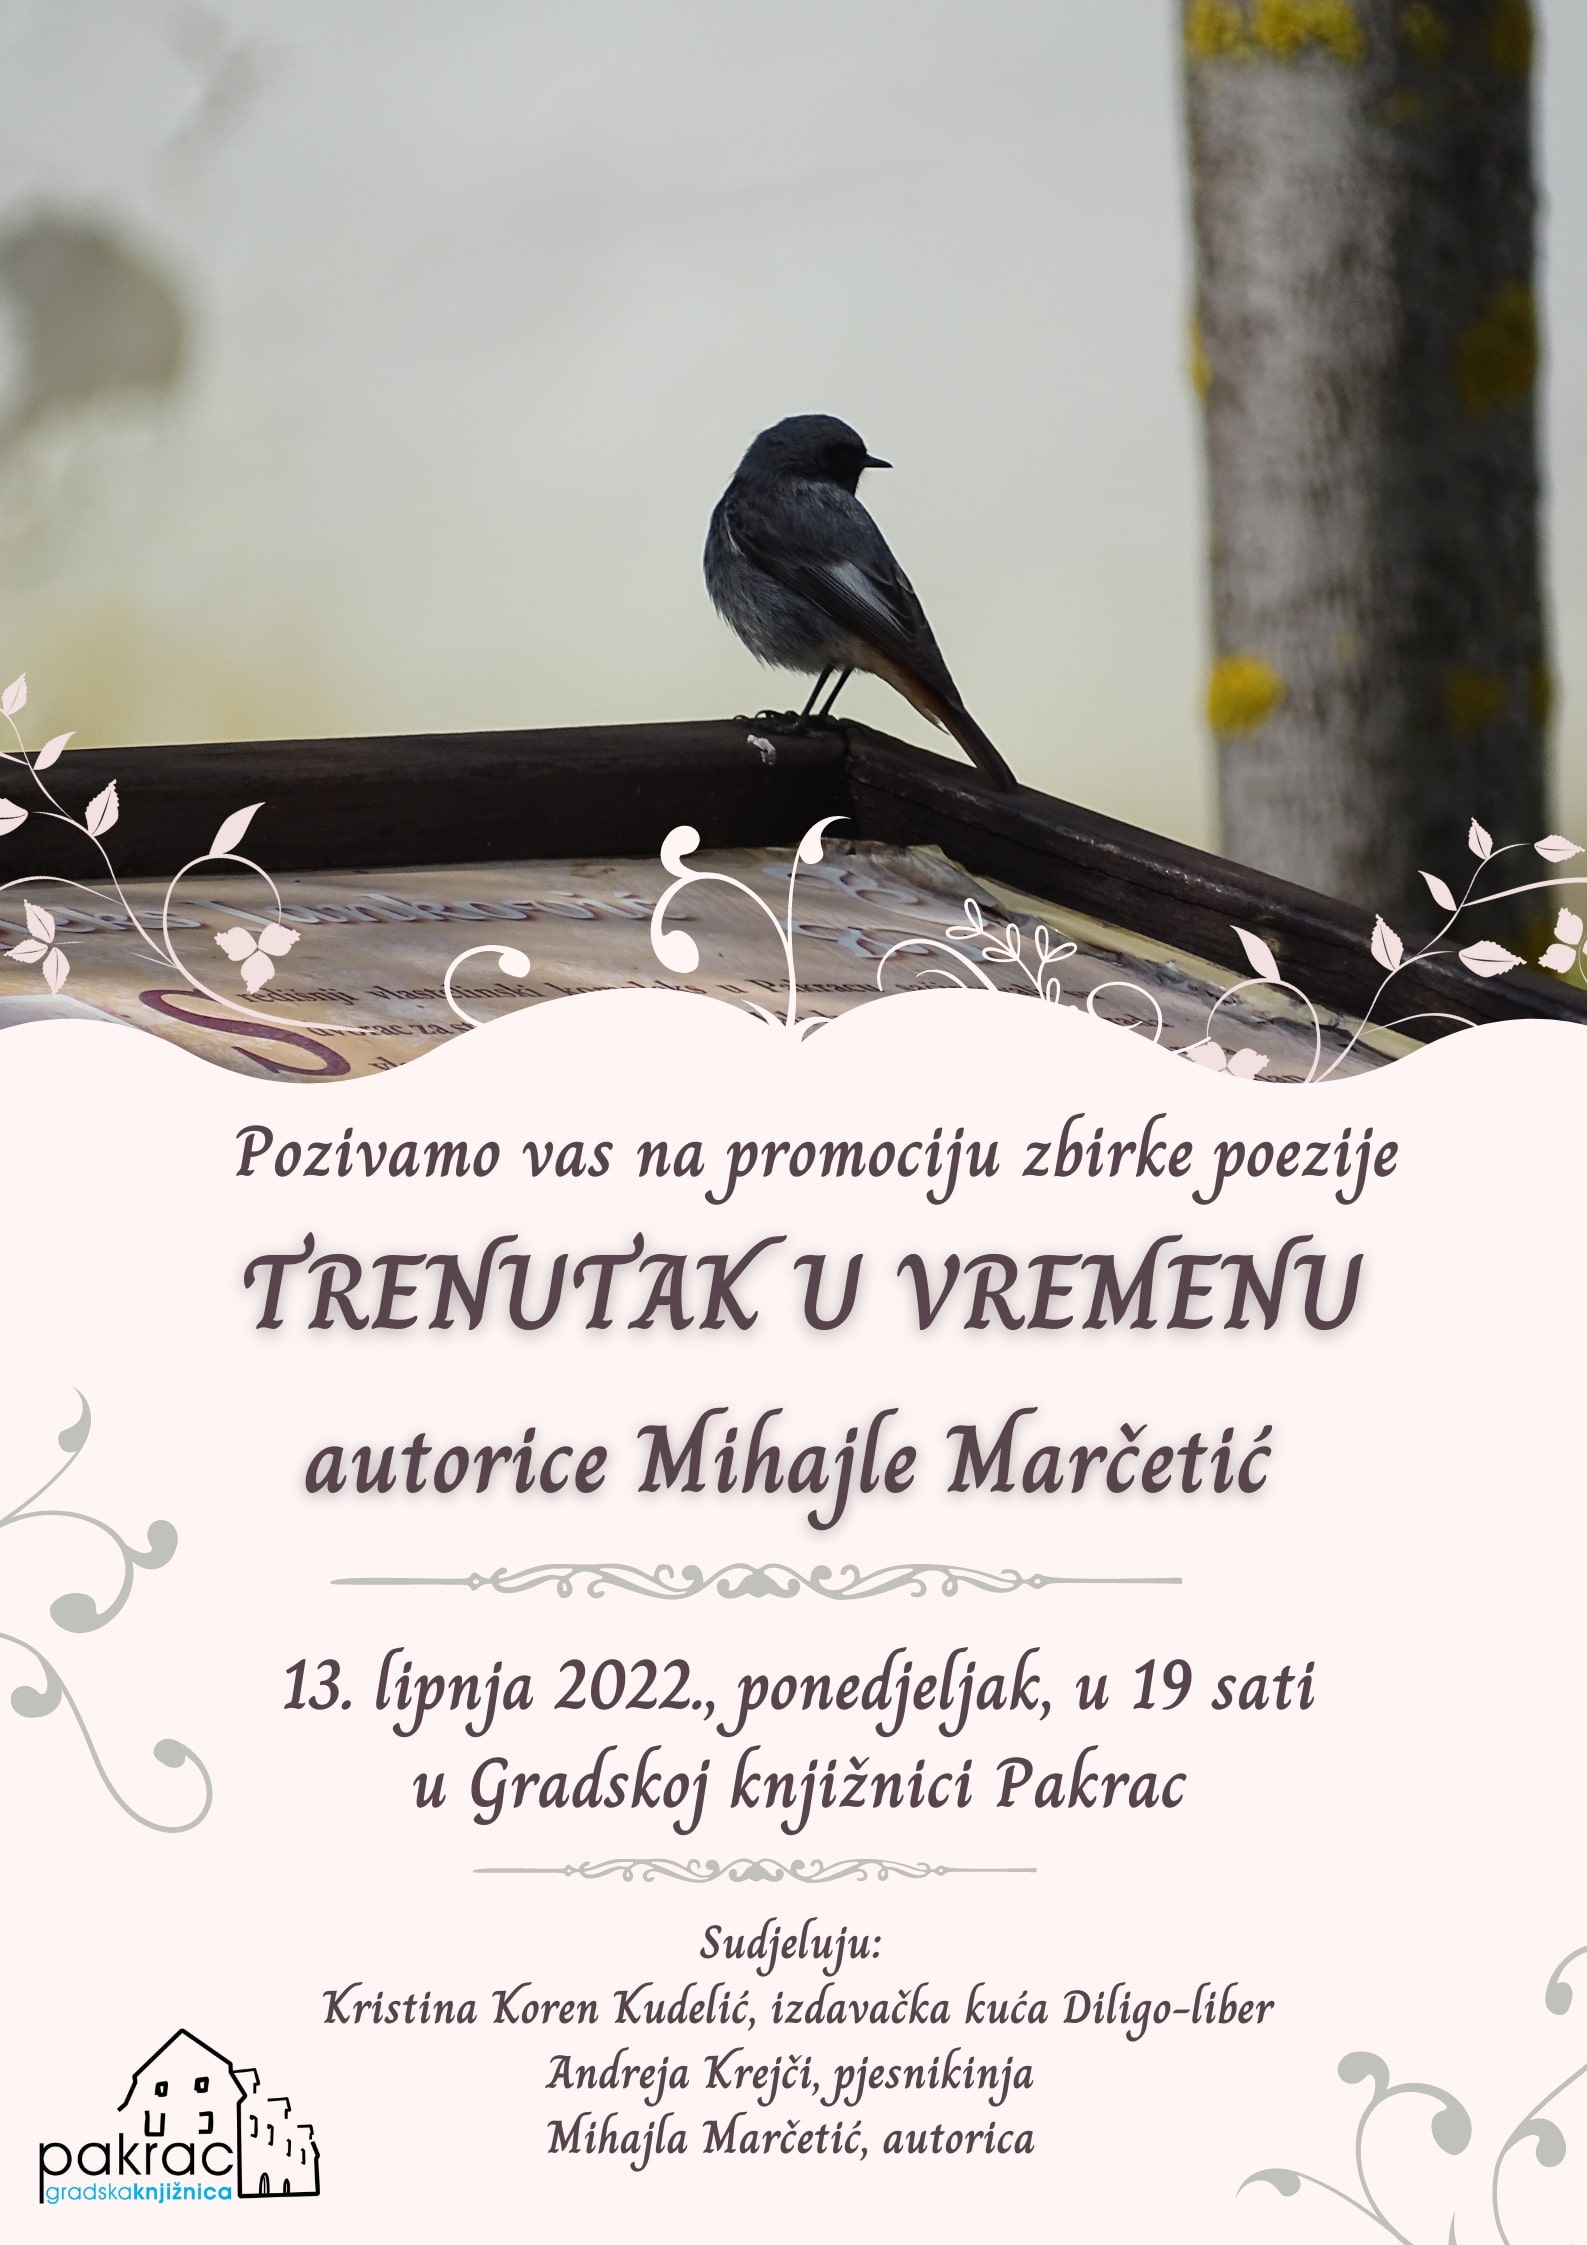 GRADSKA KNJIŽNICA PAKRAC Promocija zbirke poezije Pakračanke Mihajle Marčetić  